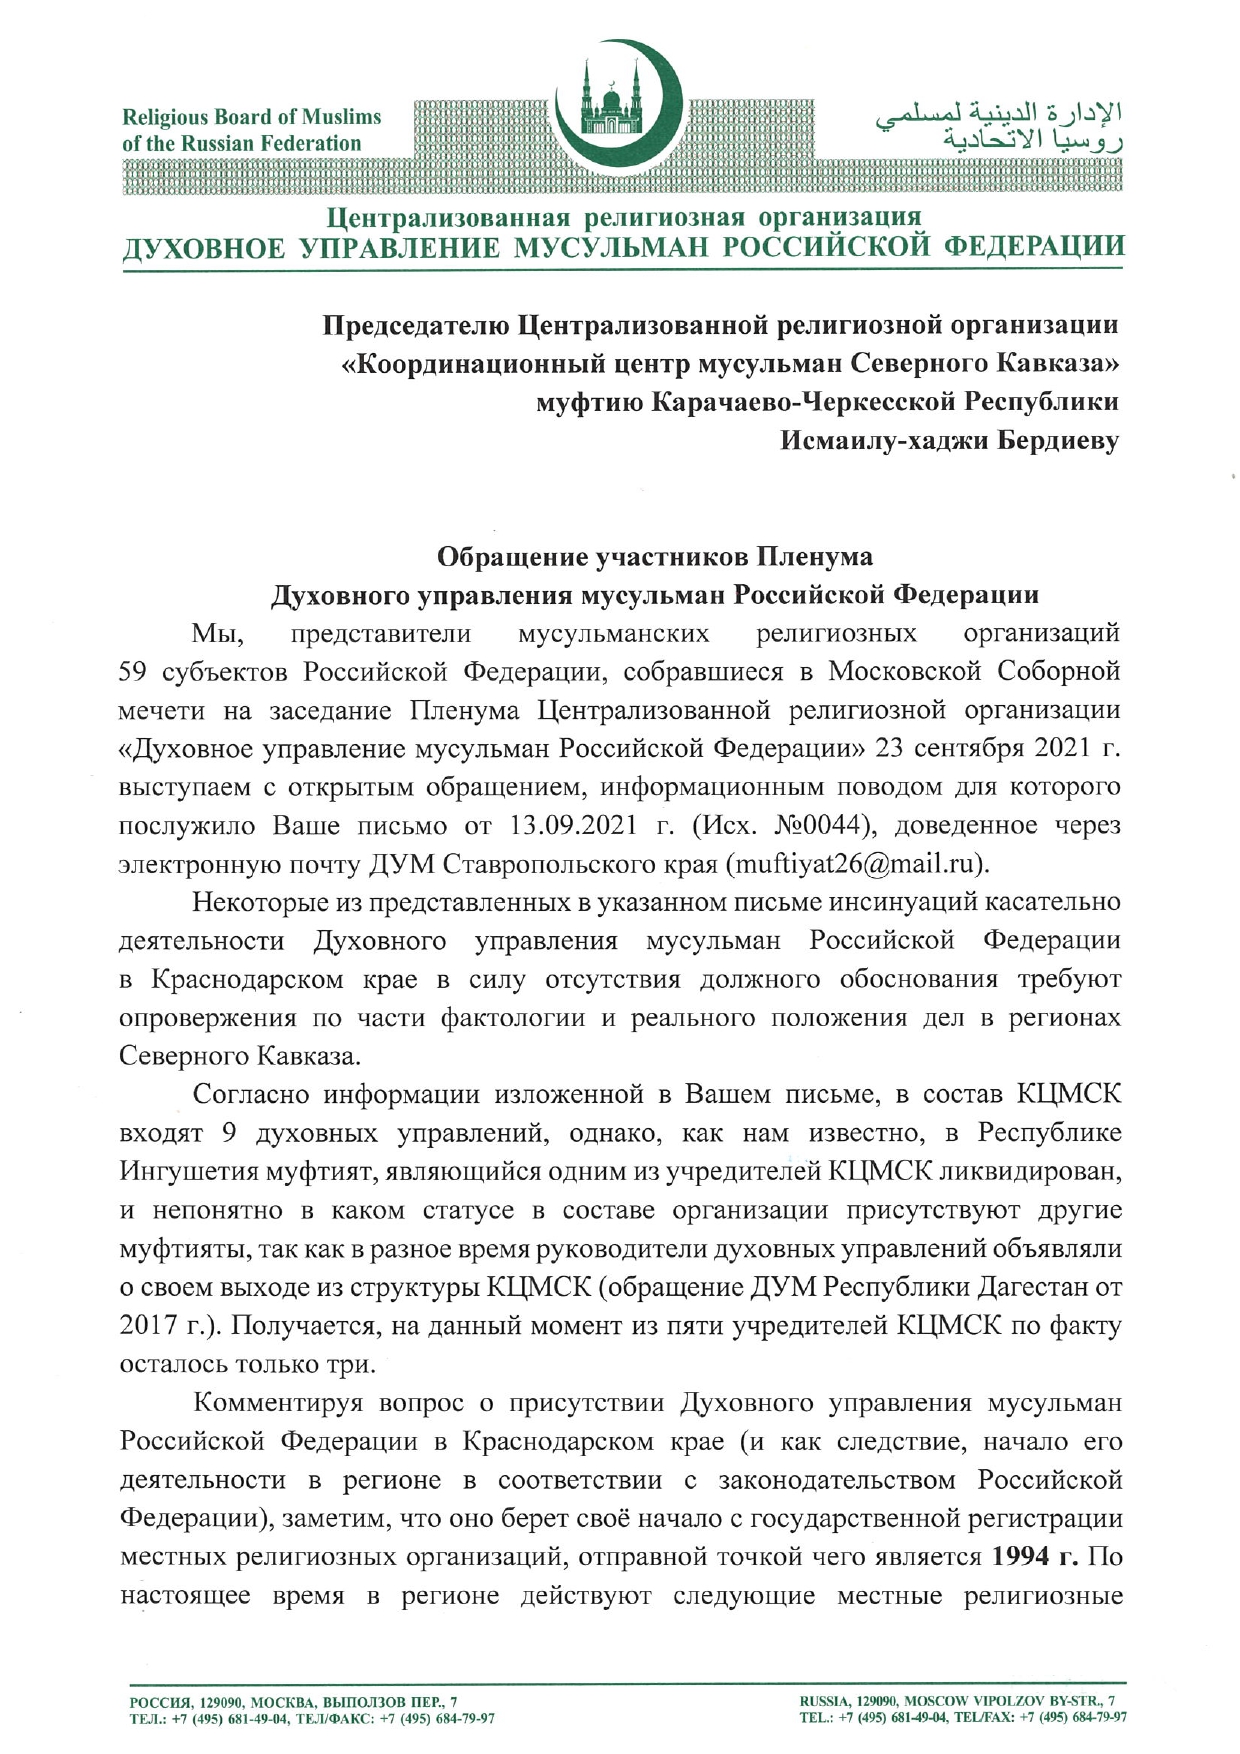 ДУМ РФ ответило на претензии кавказских муфтиев из КЦМСК